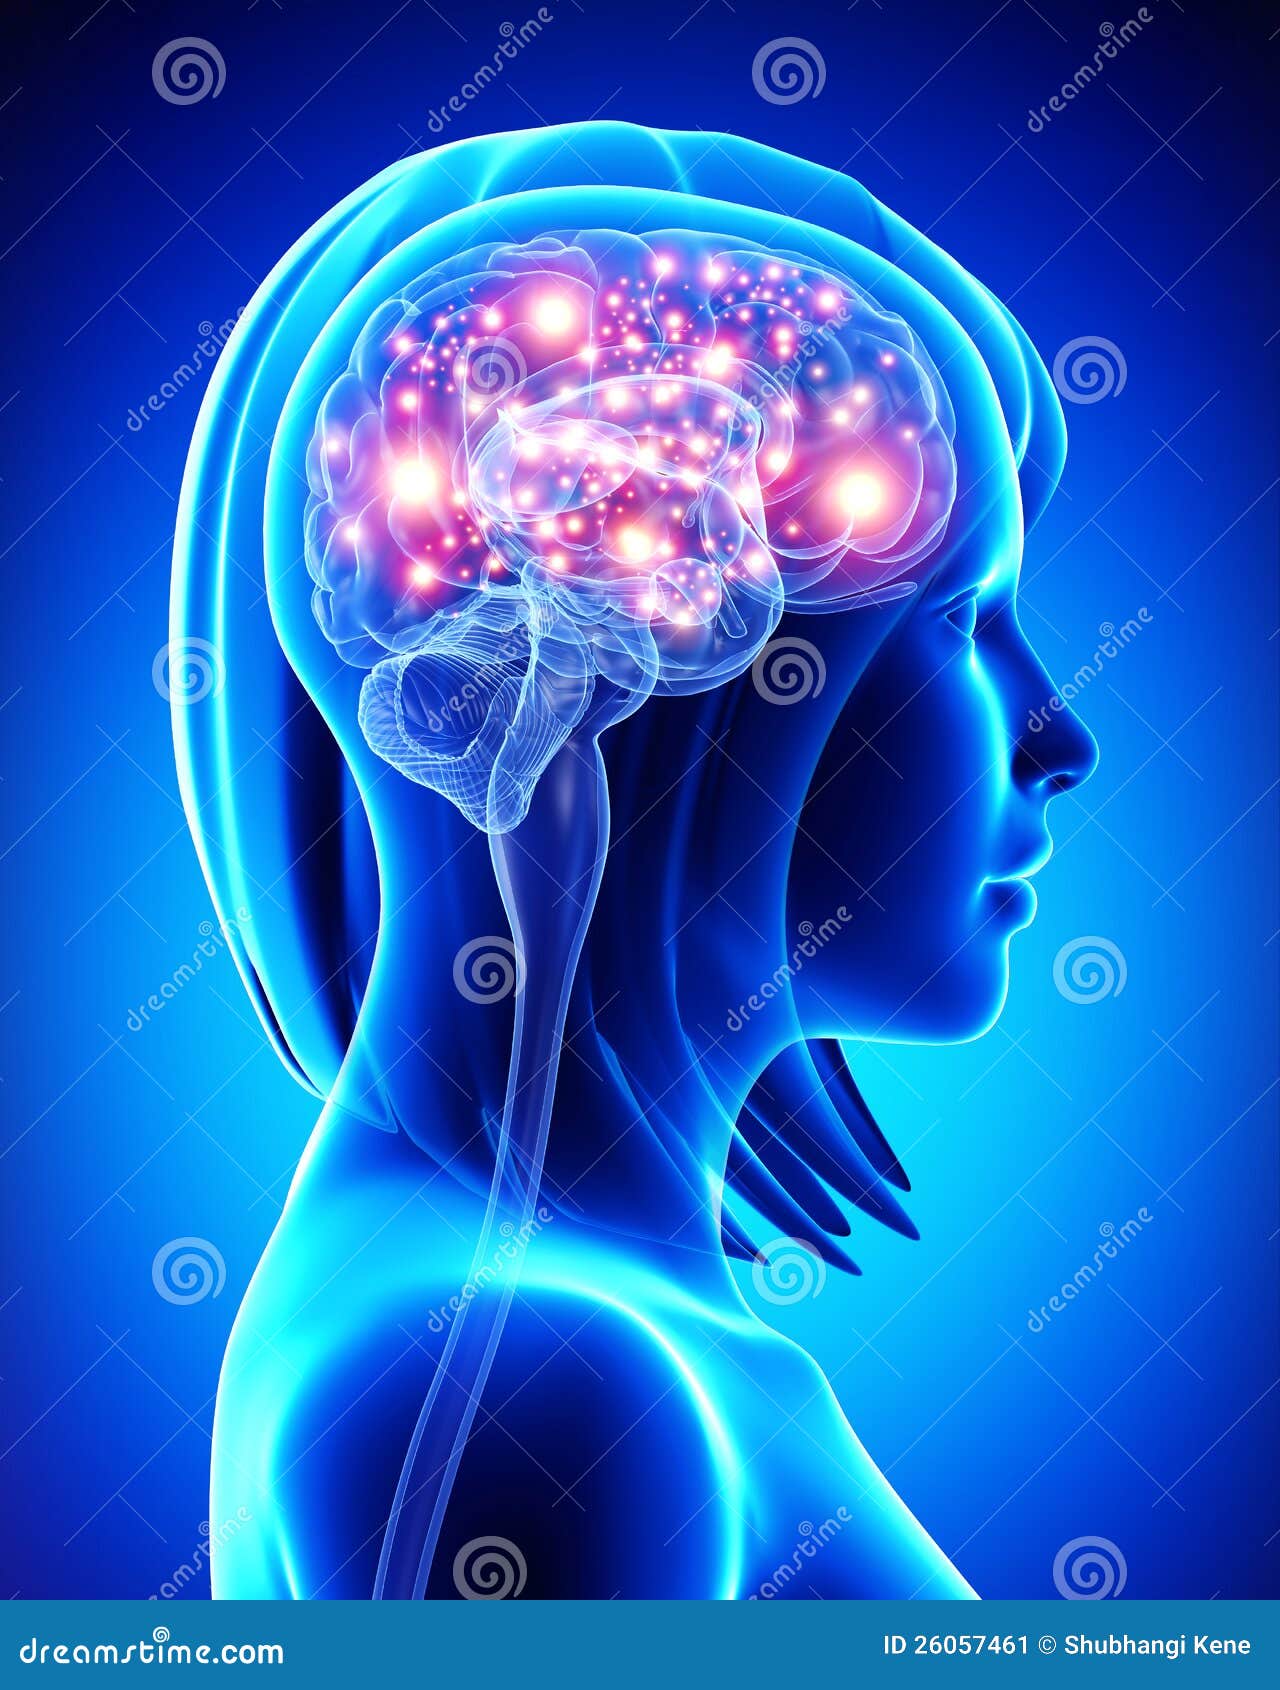 Human active brain stock illustration. Image of medicine - 26057461